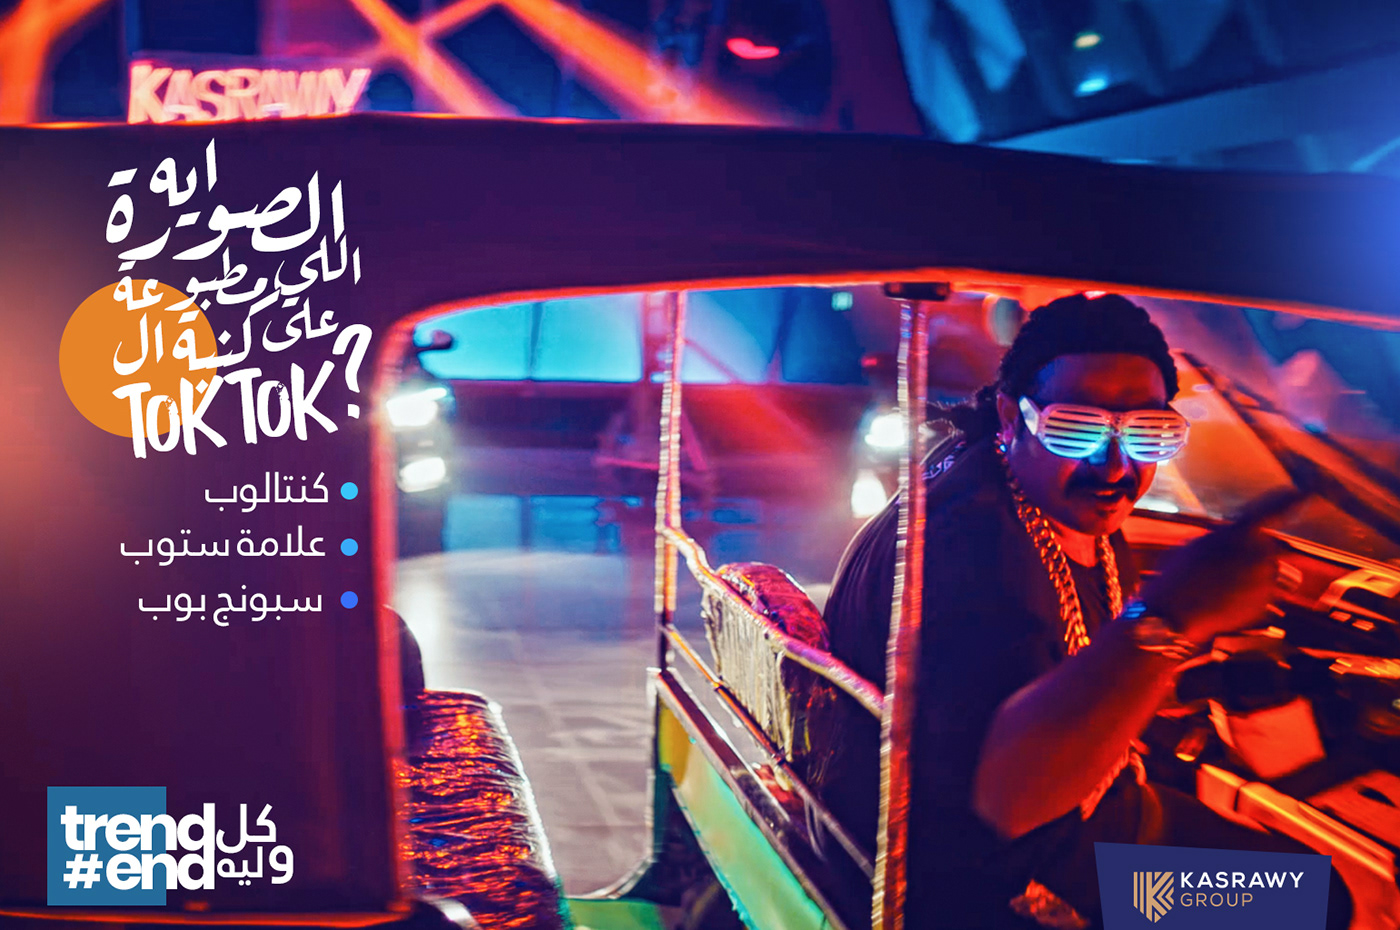 kasrawy egypt creative facebook instagram Cars designs social media trend Digital campaigns